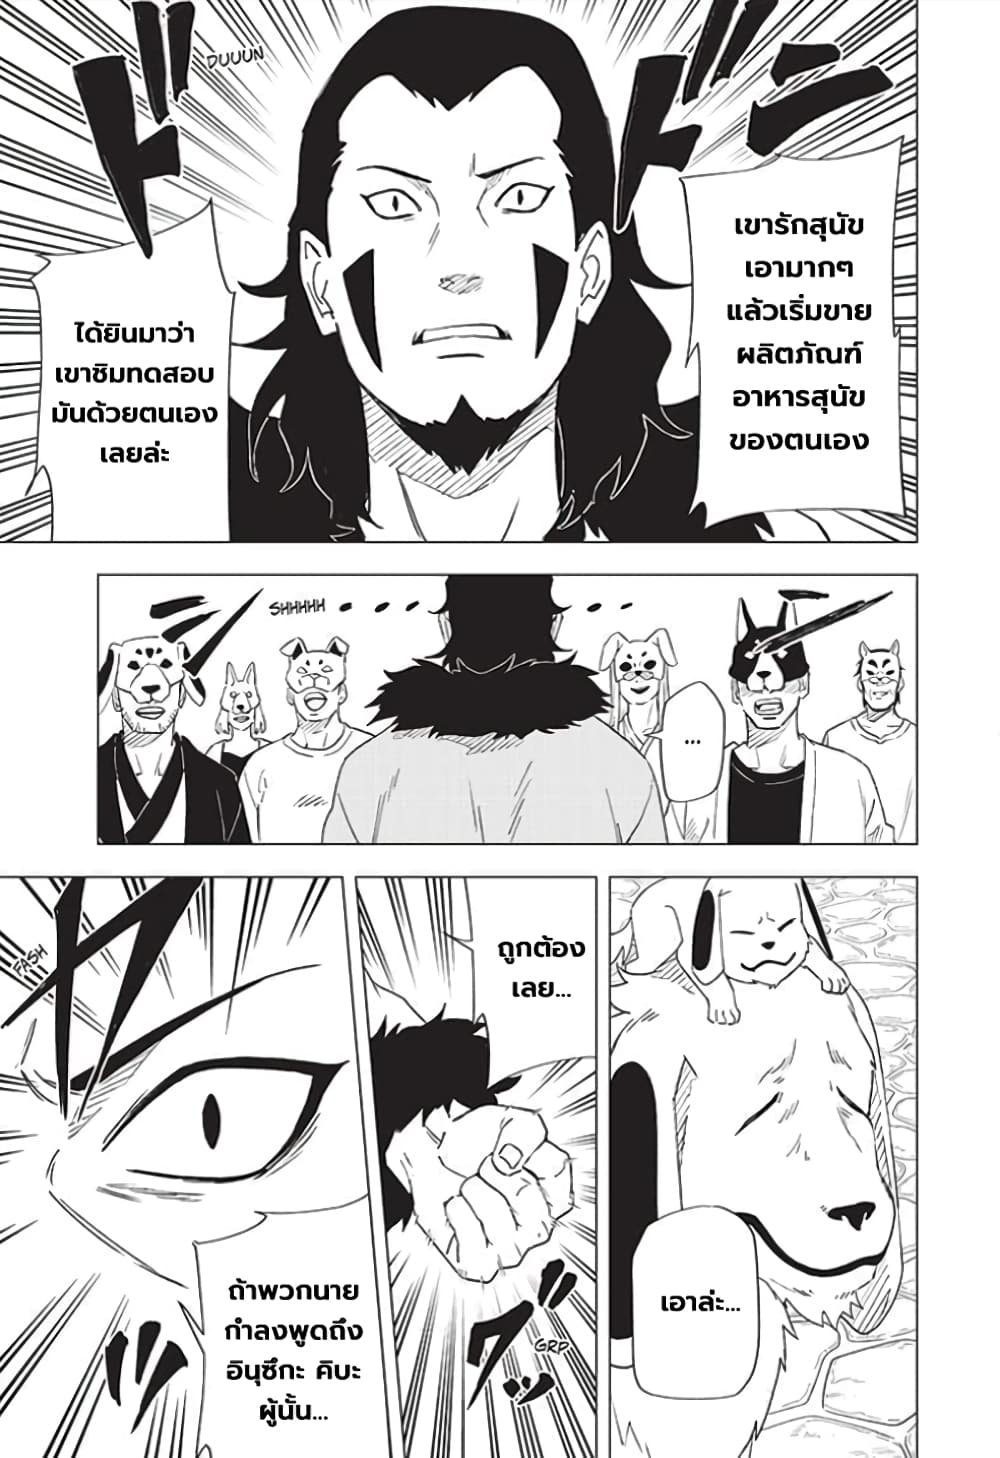 Naruto Konoha’s Story – The Steam Ninja Scrolls The Manga ตอนที่ 5 (5)